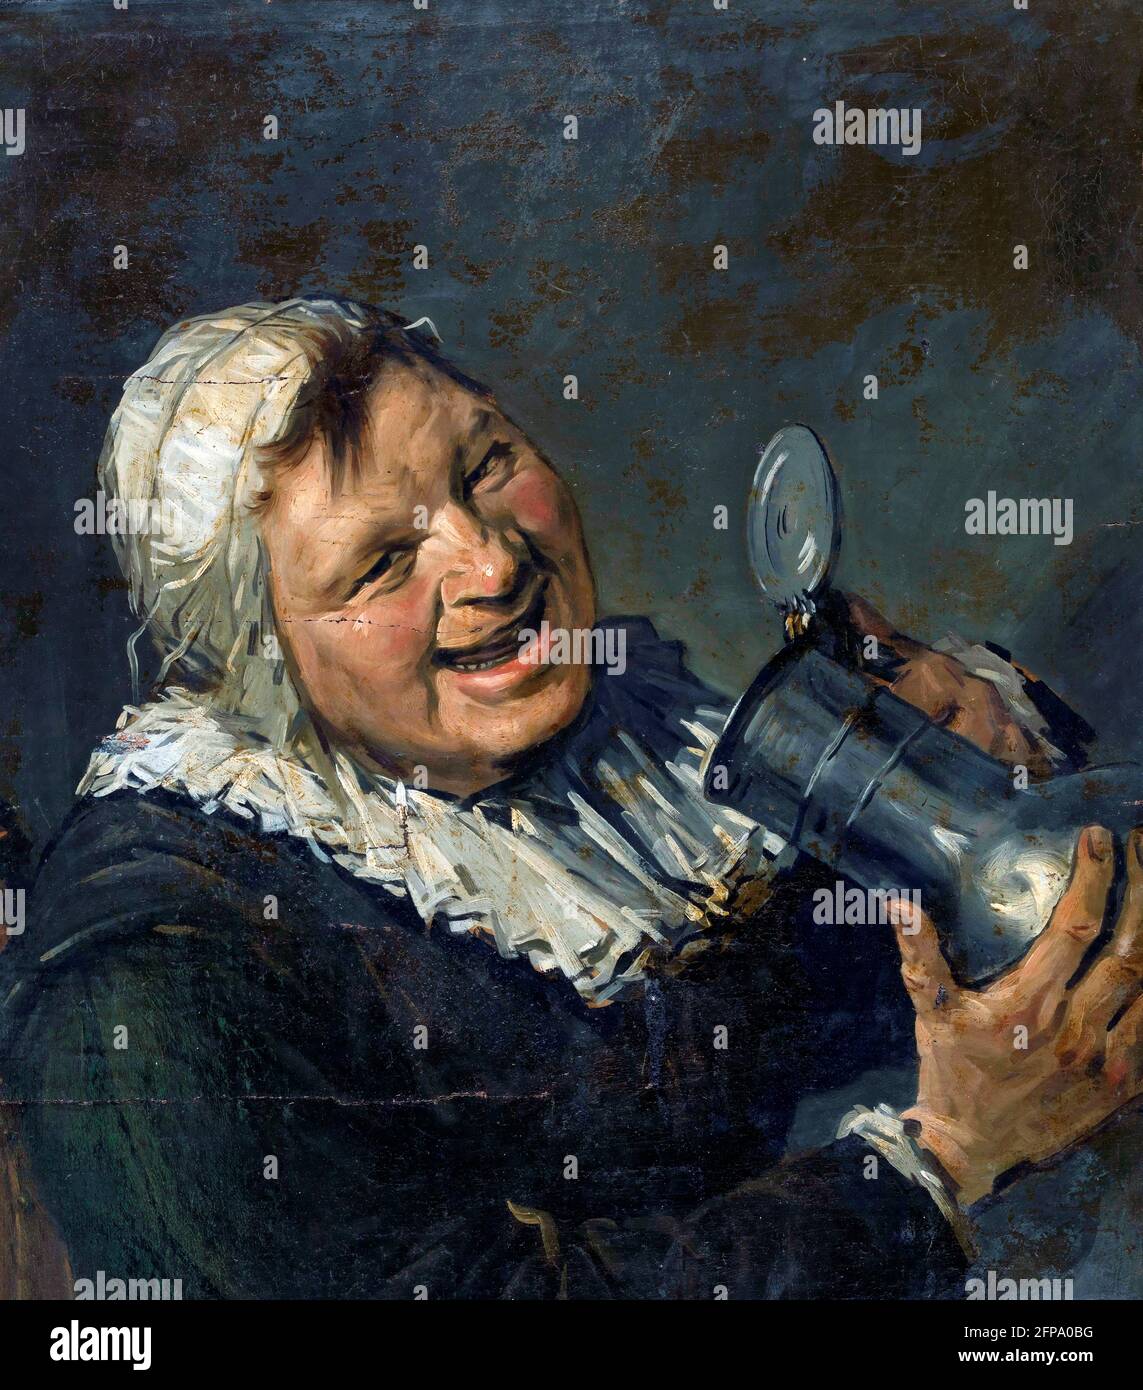 Han van Meegeren. Malle Babbe, un dipinto nello stile di Frans Hals del famoso falsario d'arte olandese, Henricus Antonius 'Han' van Meegeren (1889-1947), olio su tela, 1930-1940 Foto Stock